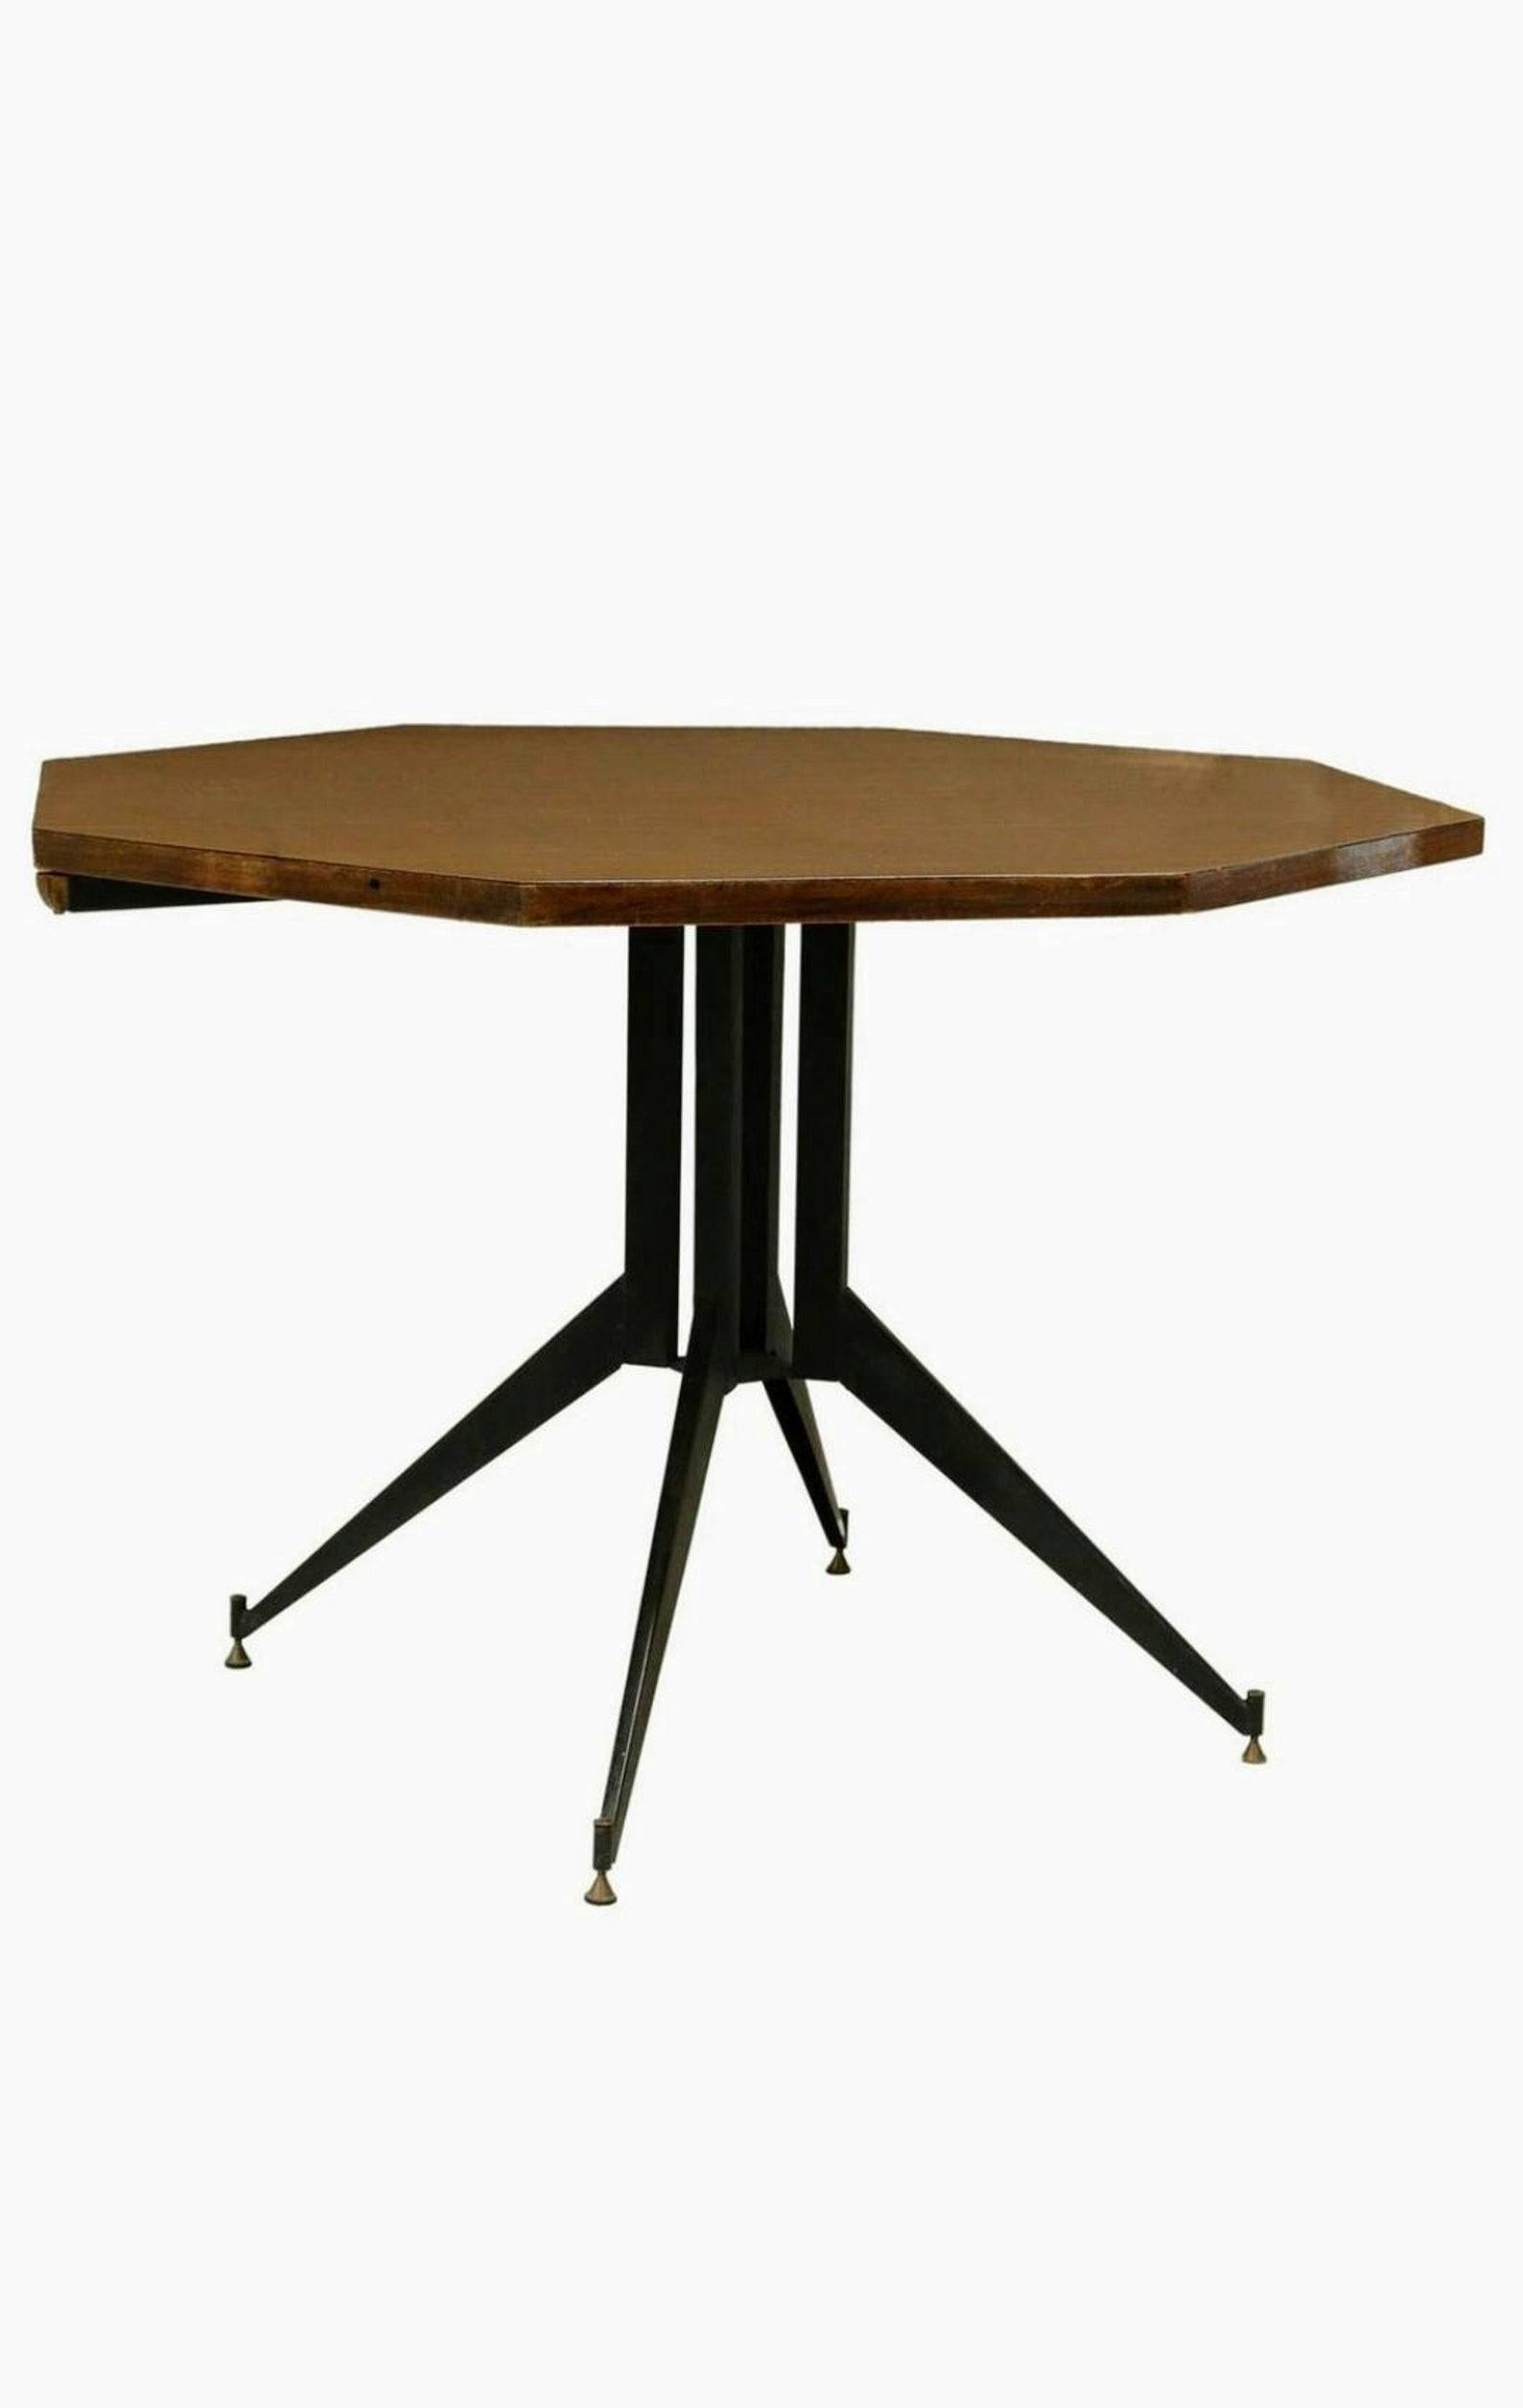 Italian Mid-Century Modern Carlo Ratti Attributed Angular Table For Sale 2